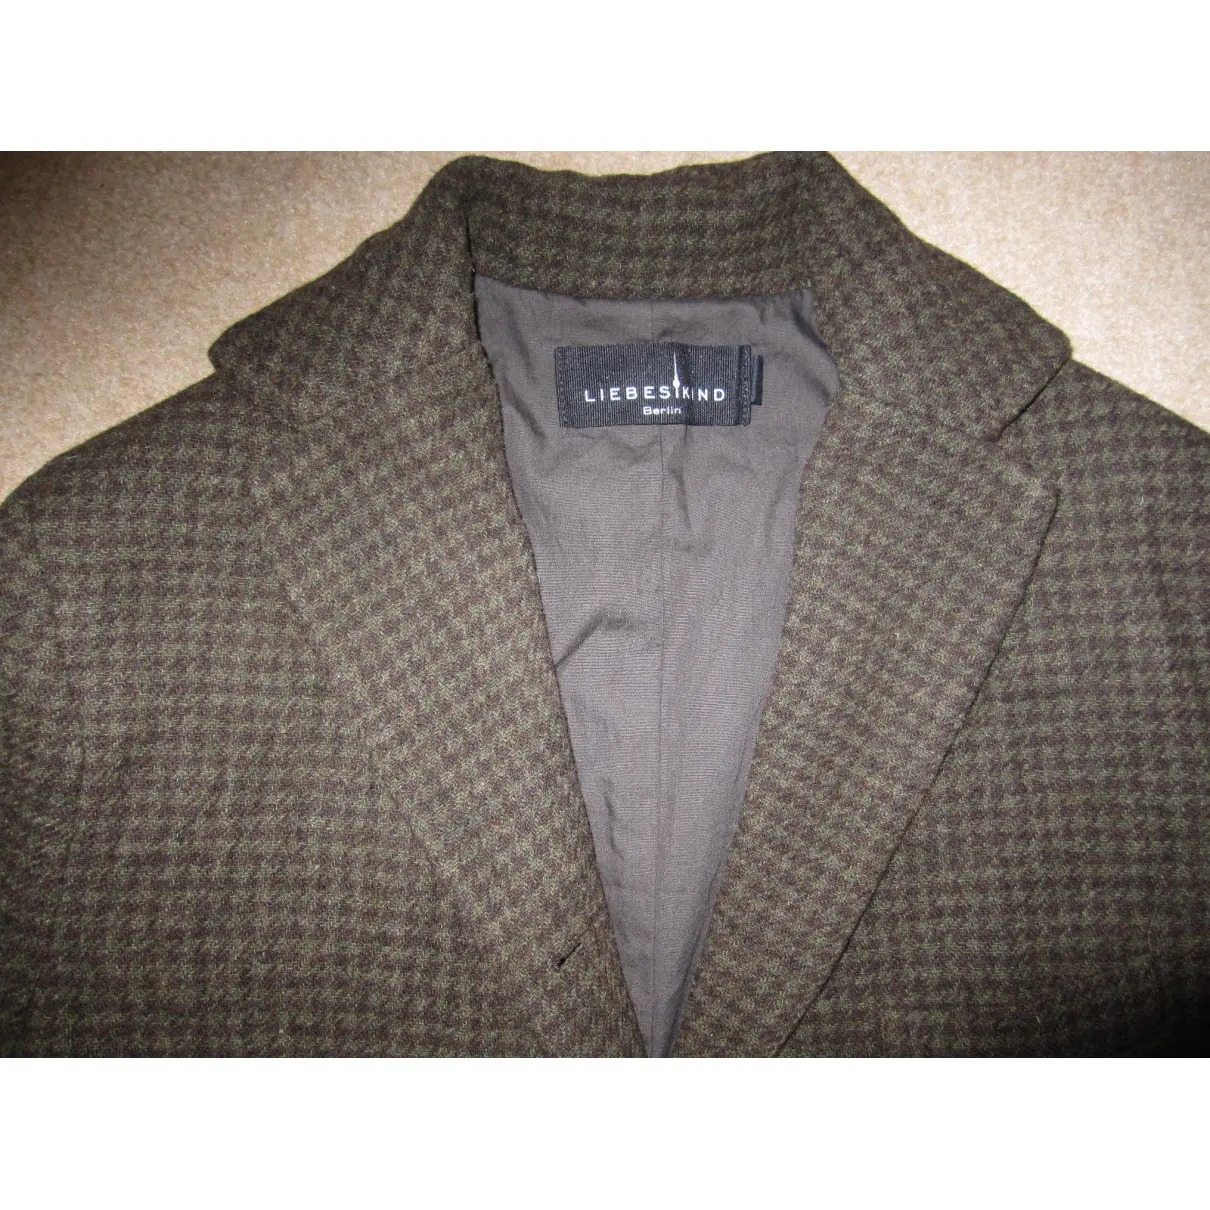 LIEBESKIND BERLIN Wool suit jacket for sale